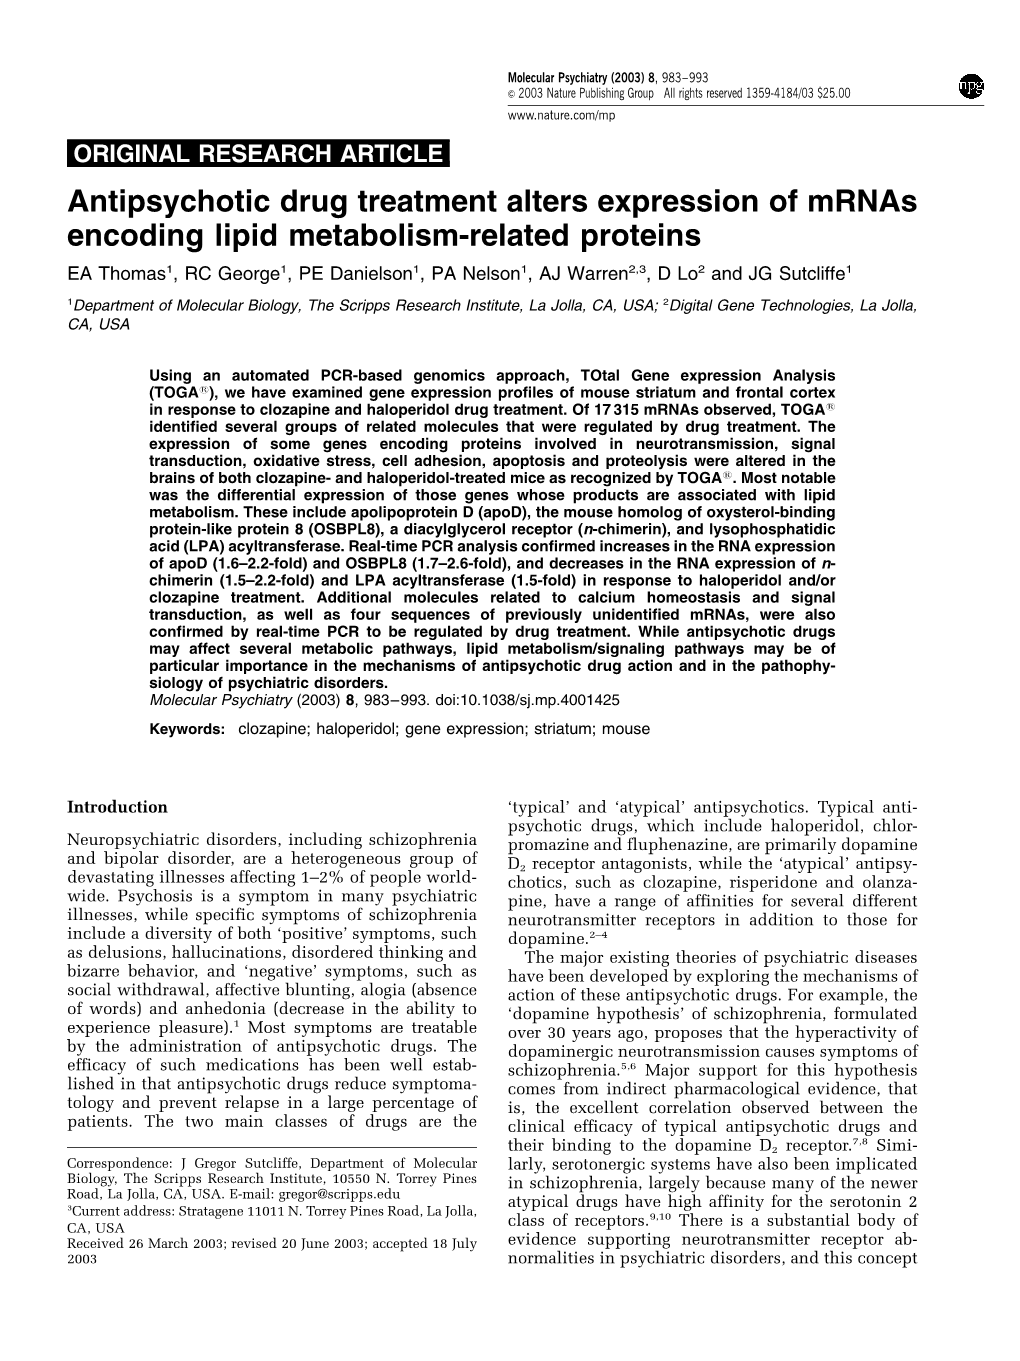 Antipsychotic Drug Treatment Alters Expression of Mrnas Encoding